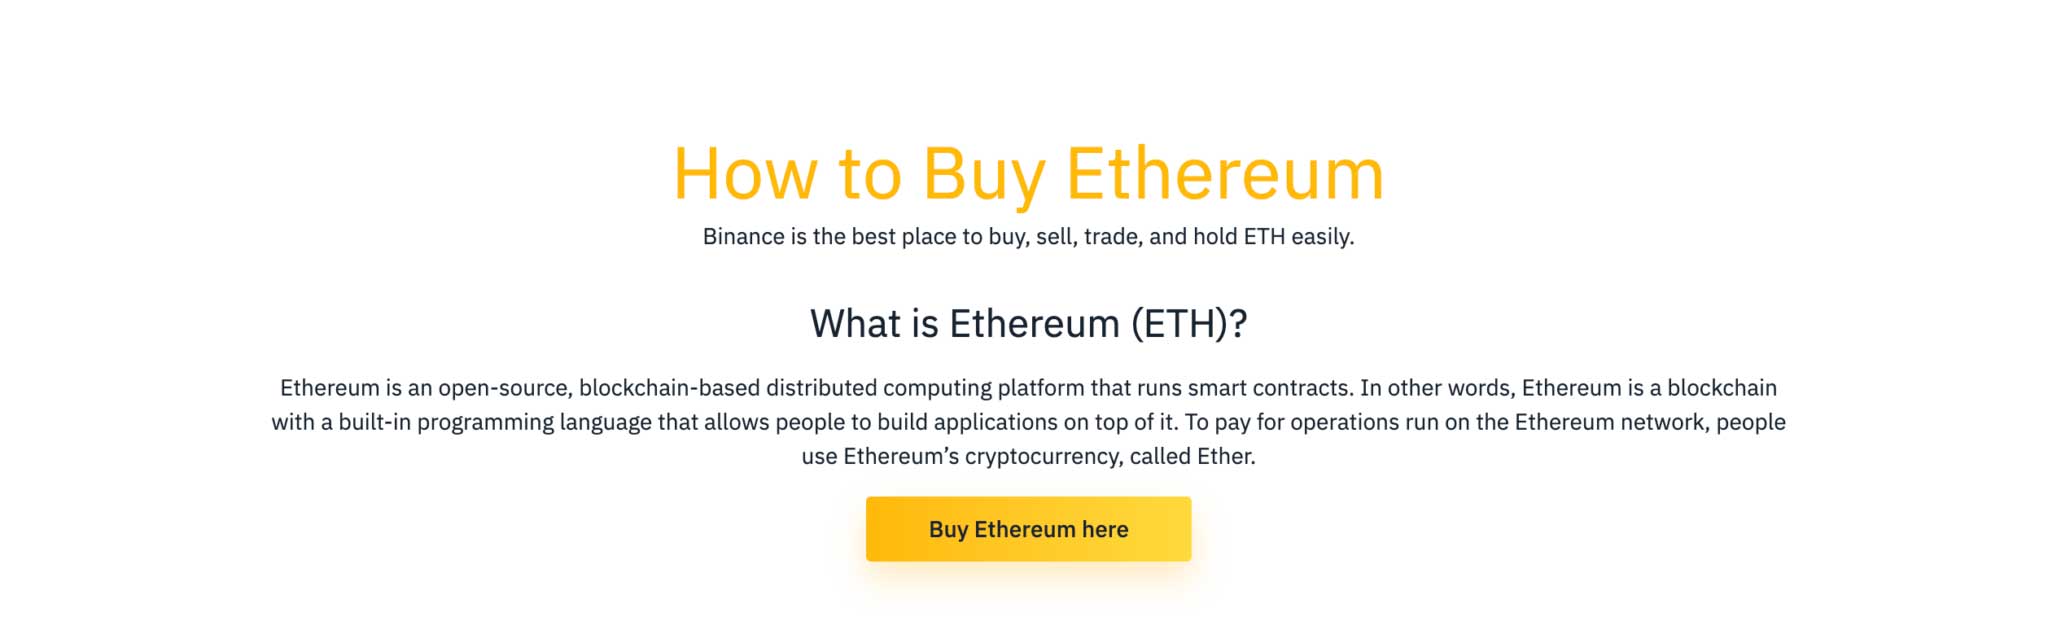 binance how to buy ethereum